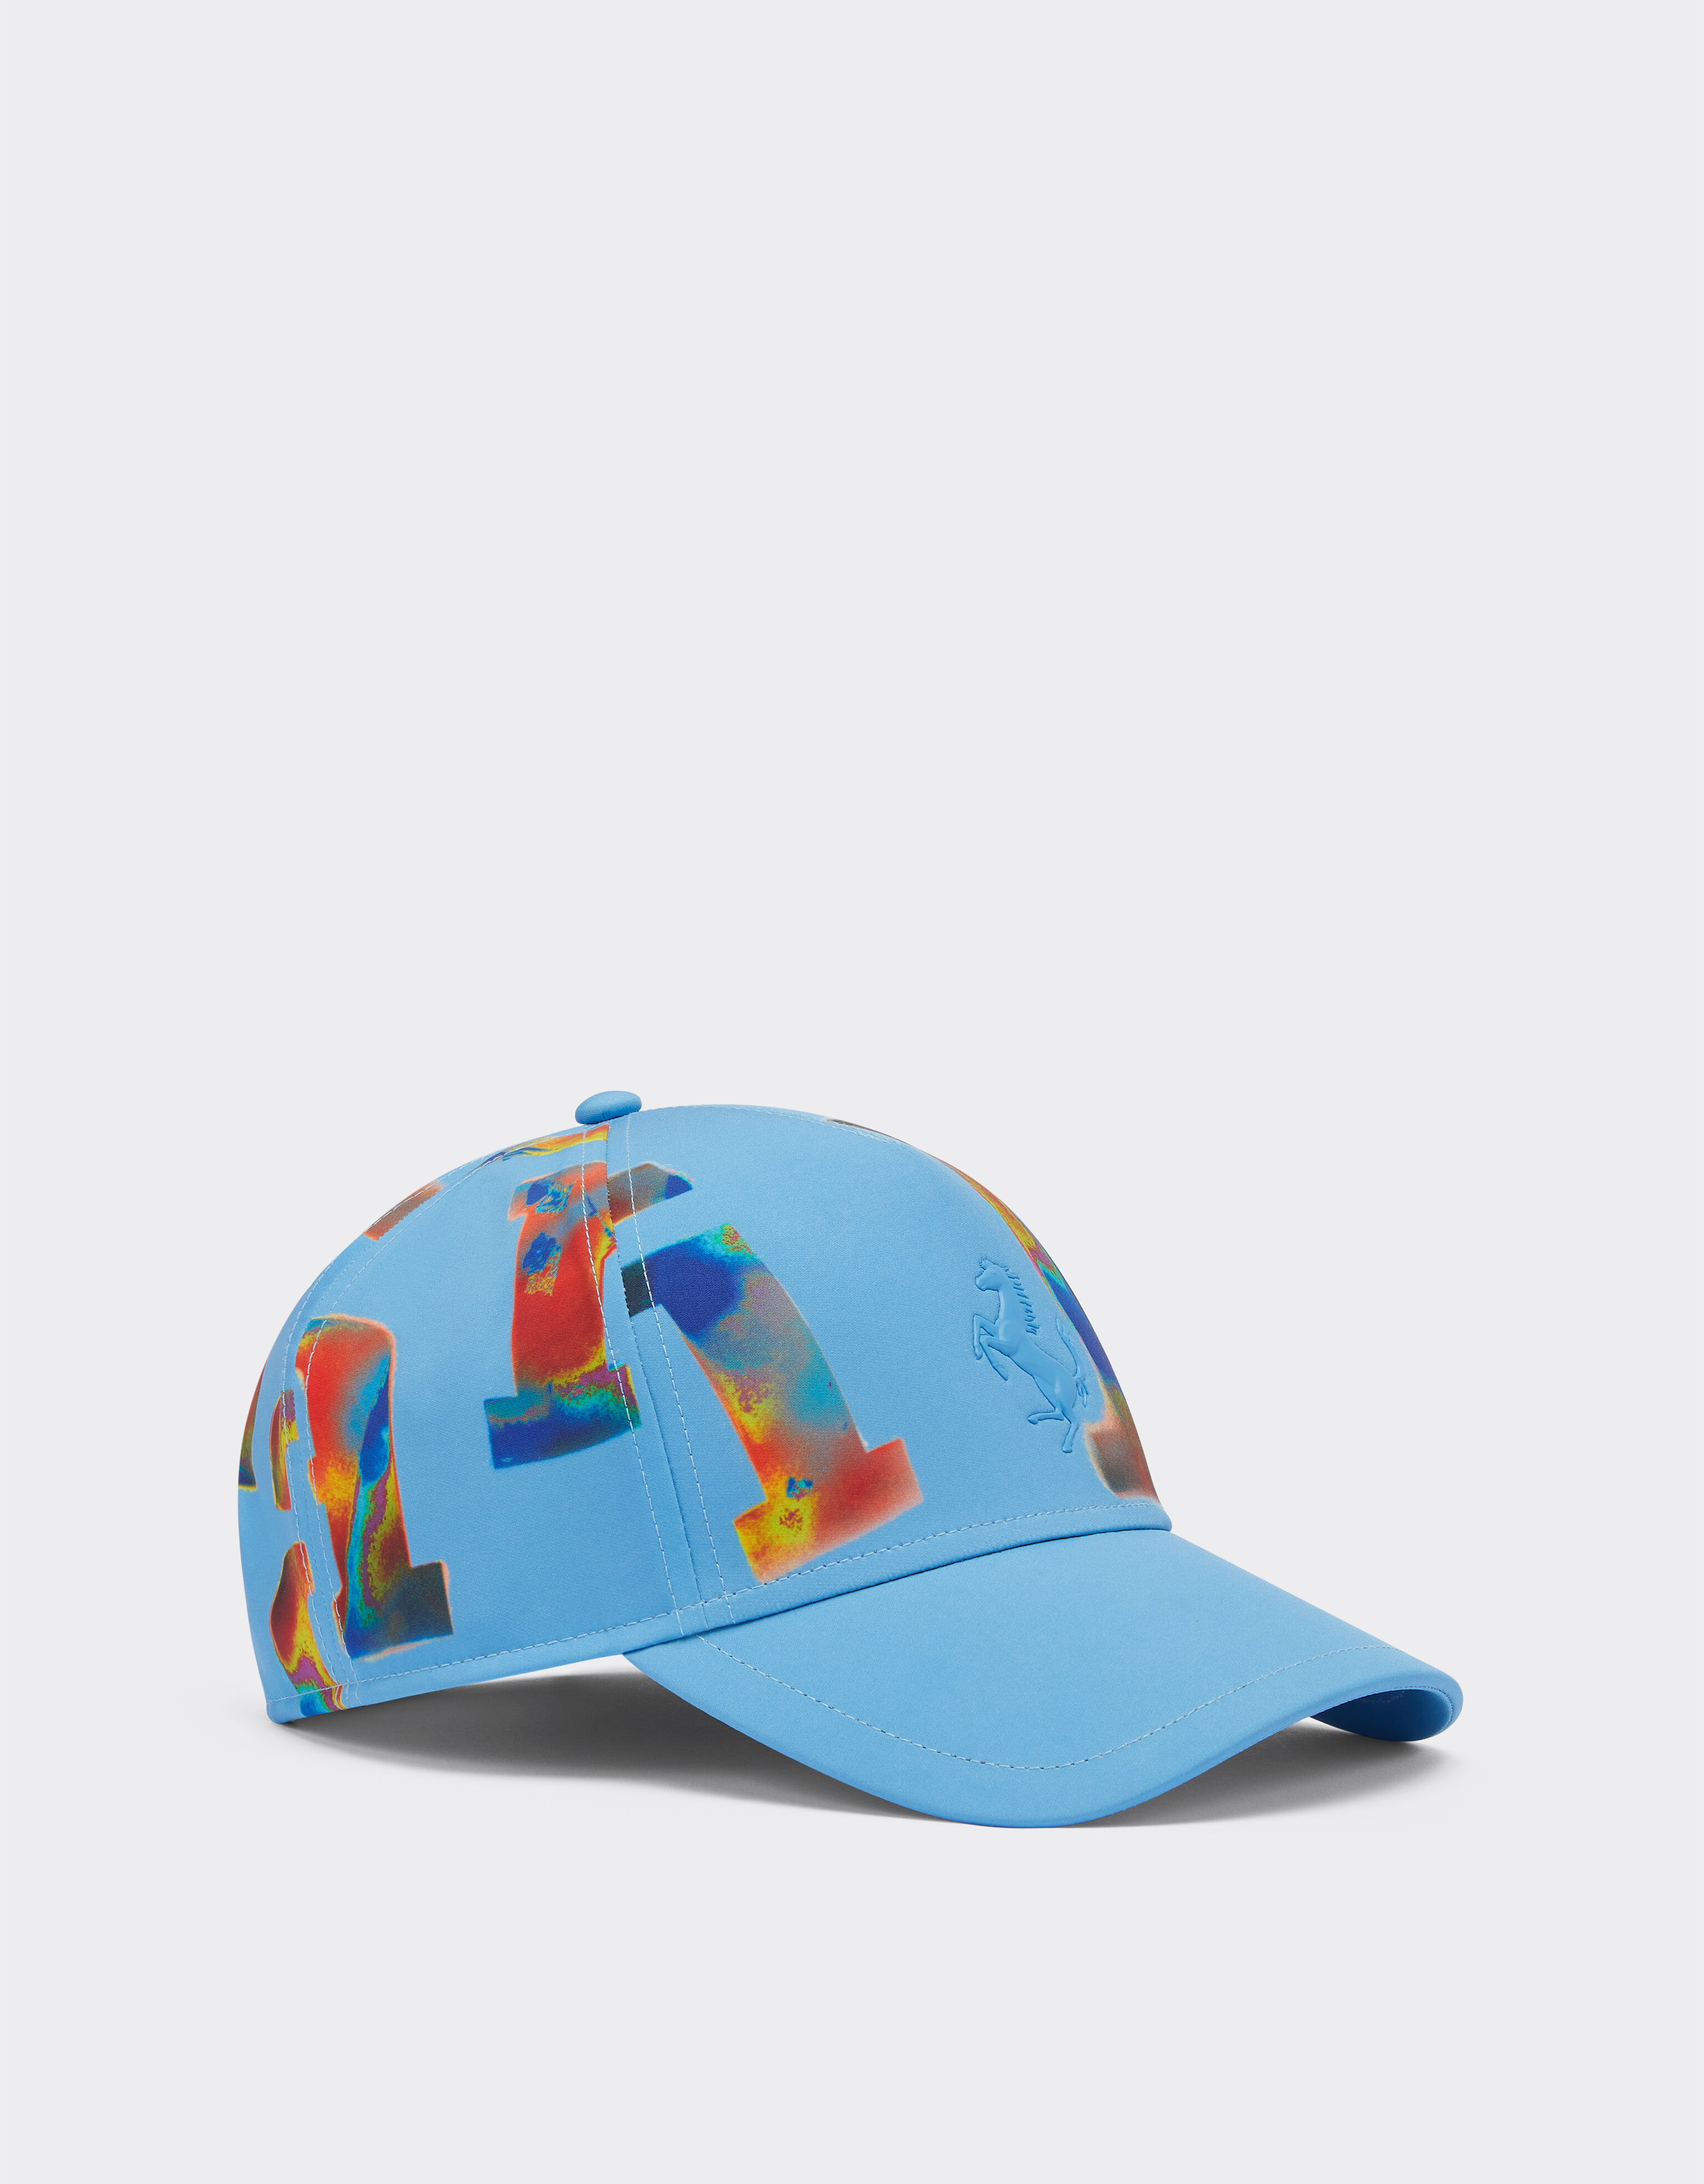 Ferrari Children’s baseball hat with Ferrari Graffiti print Circuit Blue 20553fK